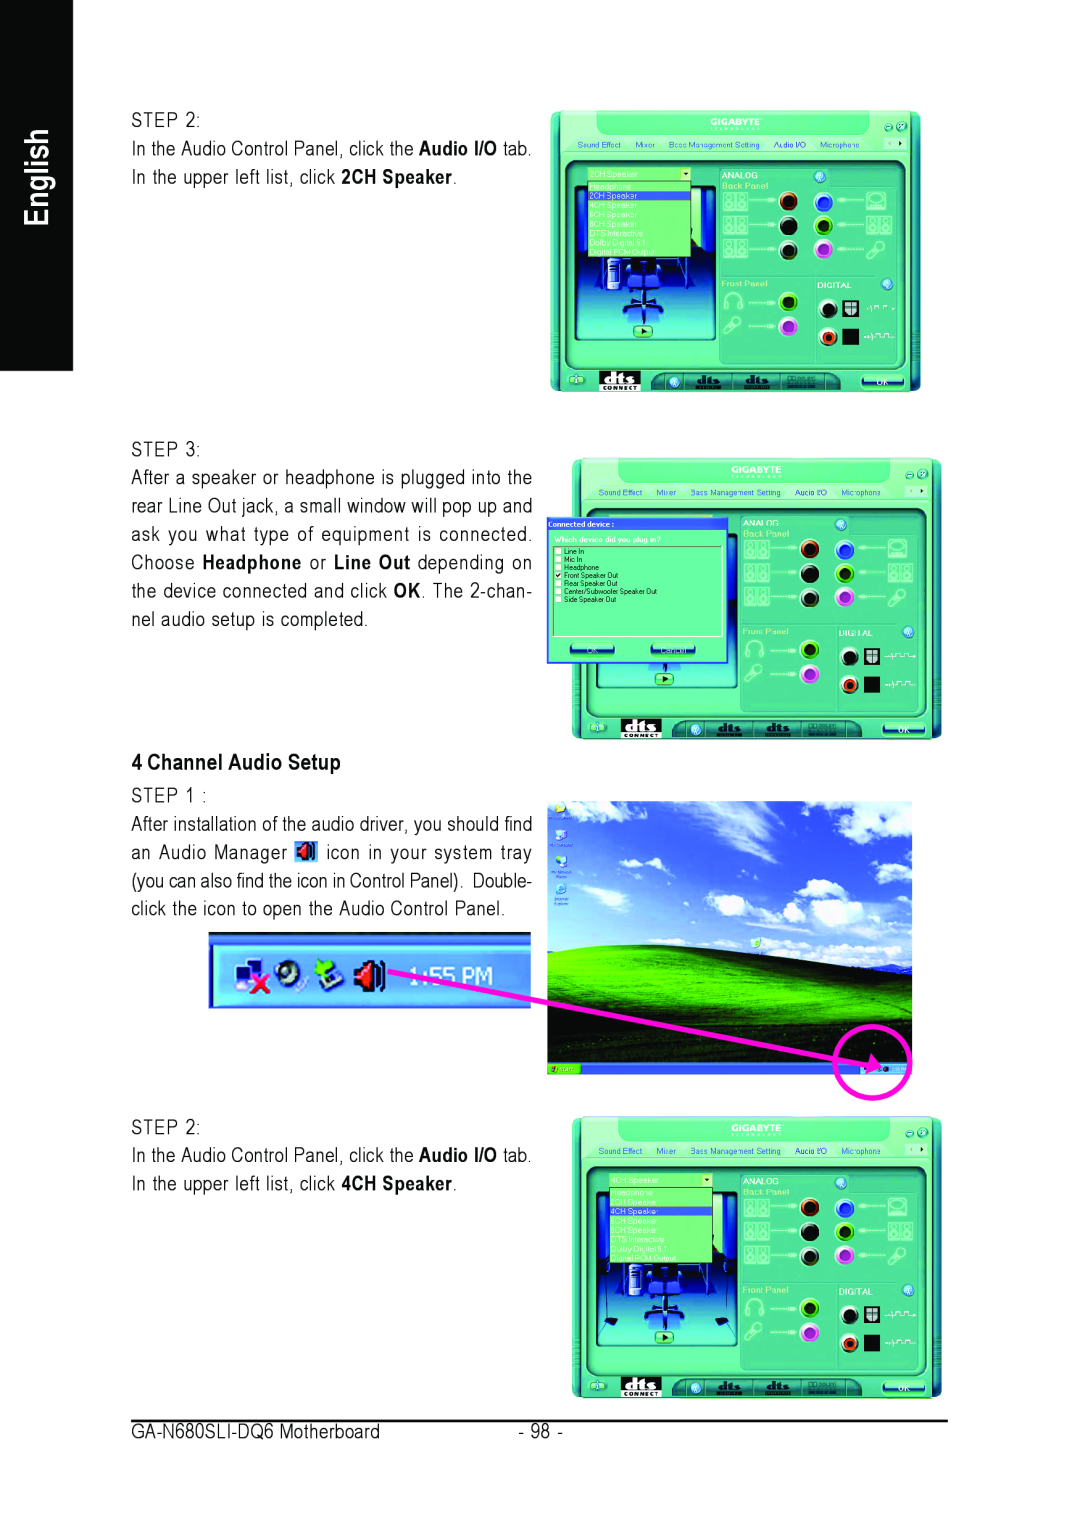 Intel GA-N680SLI-DQ6 user manual Channel Audio Setup, English 